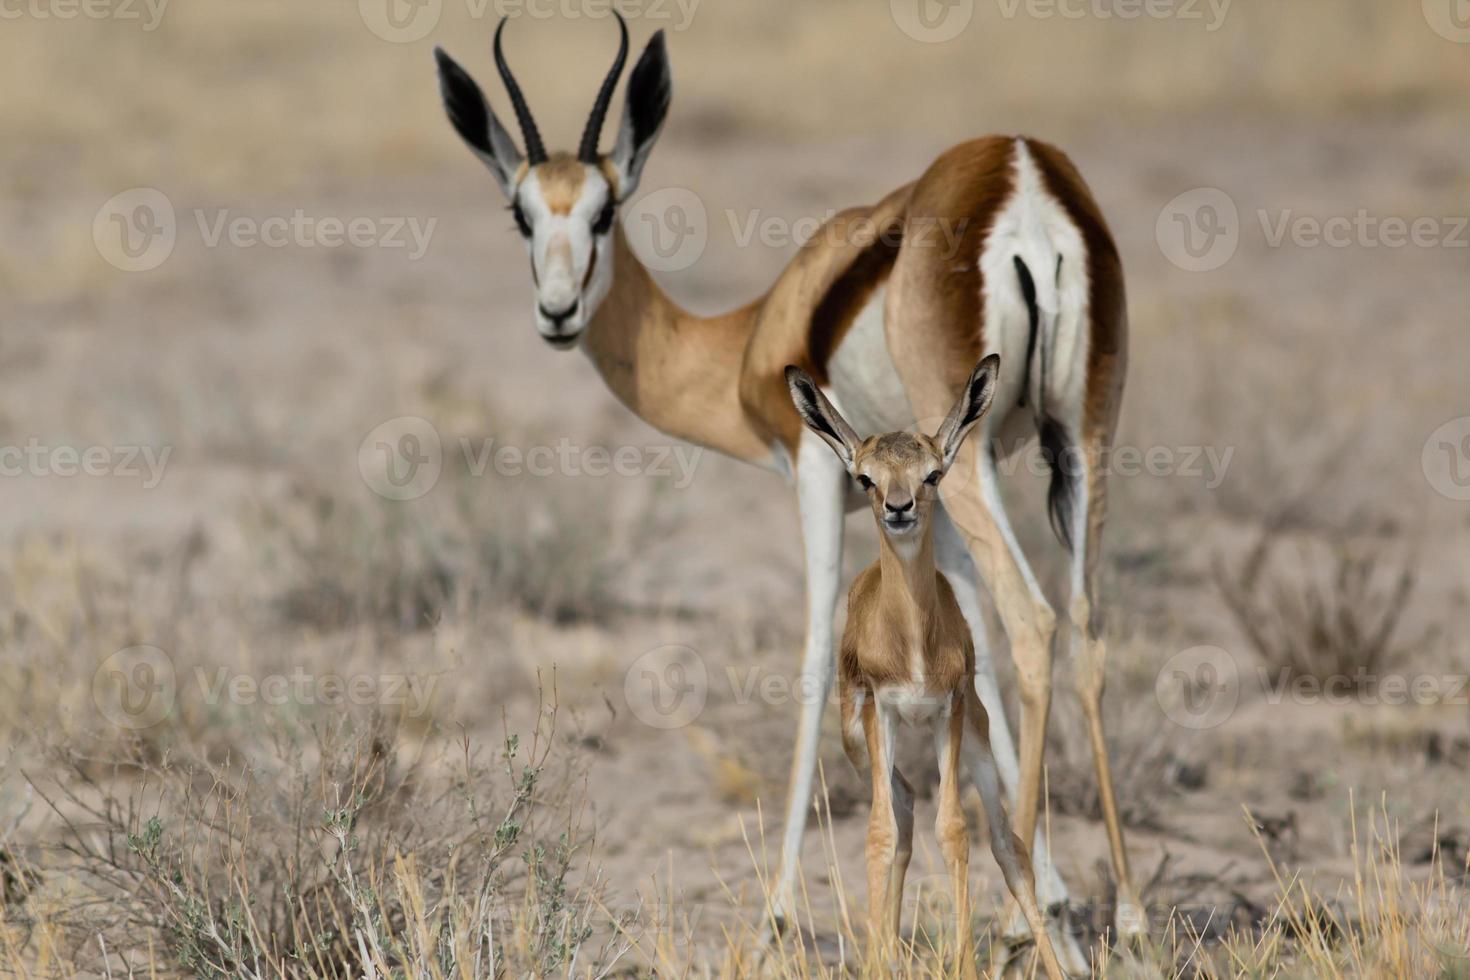 Protective mom and baby springbok stare back in the desert photo